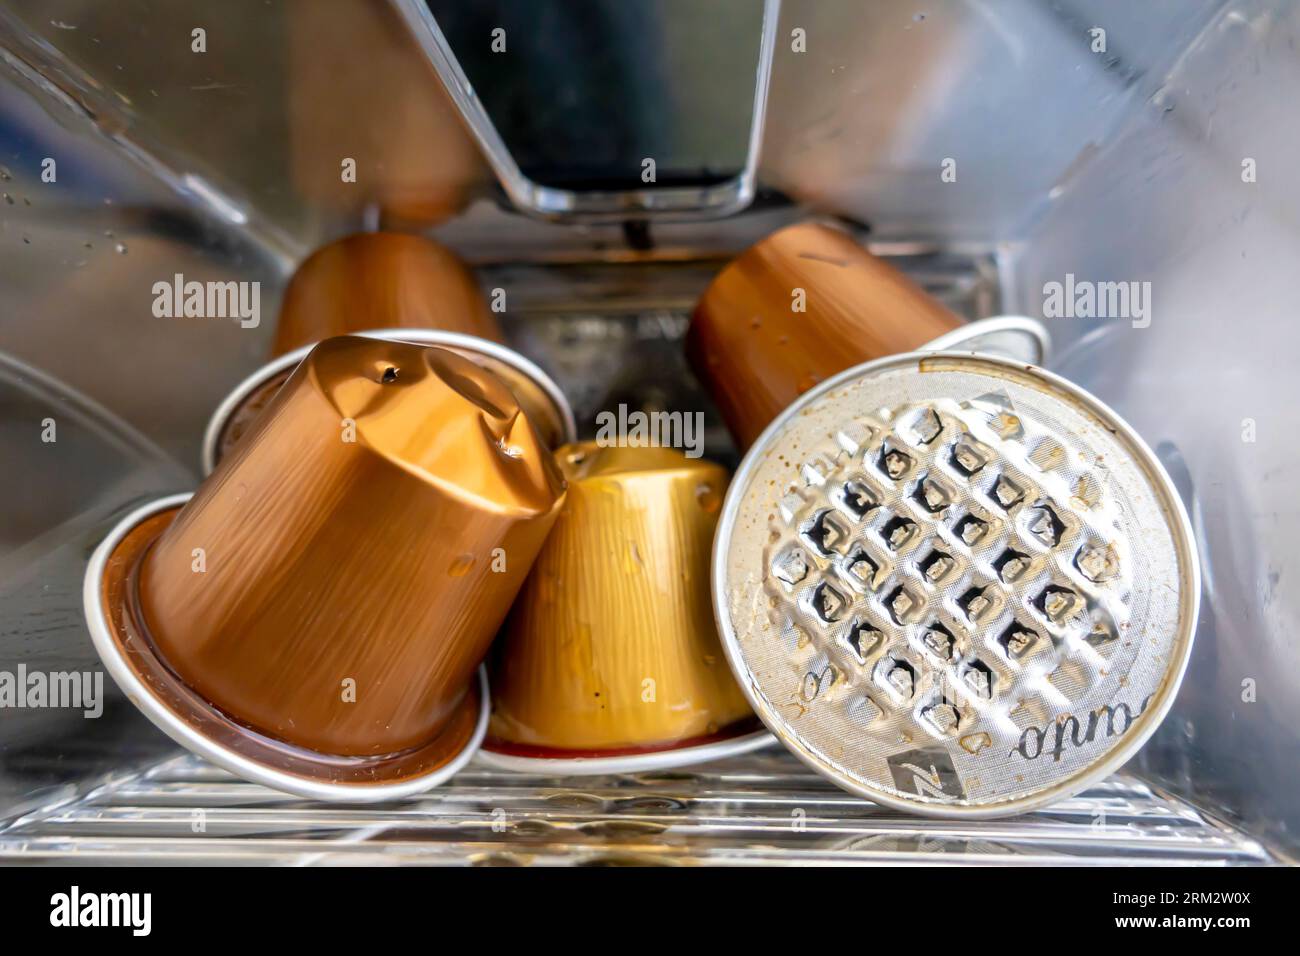 Used espresso coffee capsules. Nespresso coffee capsule discarded. Coffee pods in the machine used, Punctured nespresso capsules, Pierced coffee pods Stock Photo